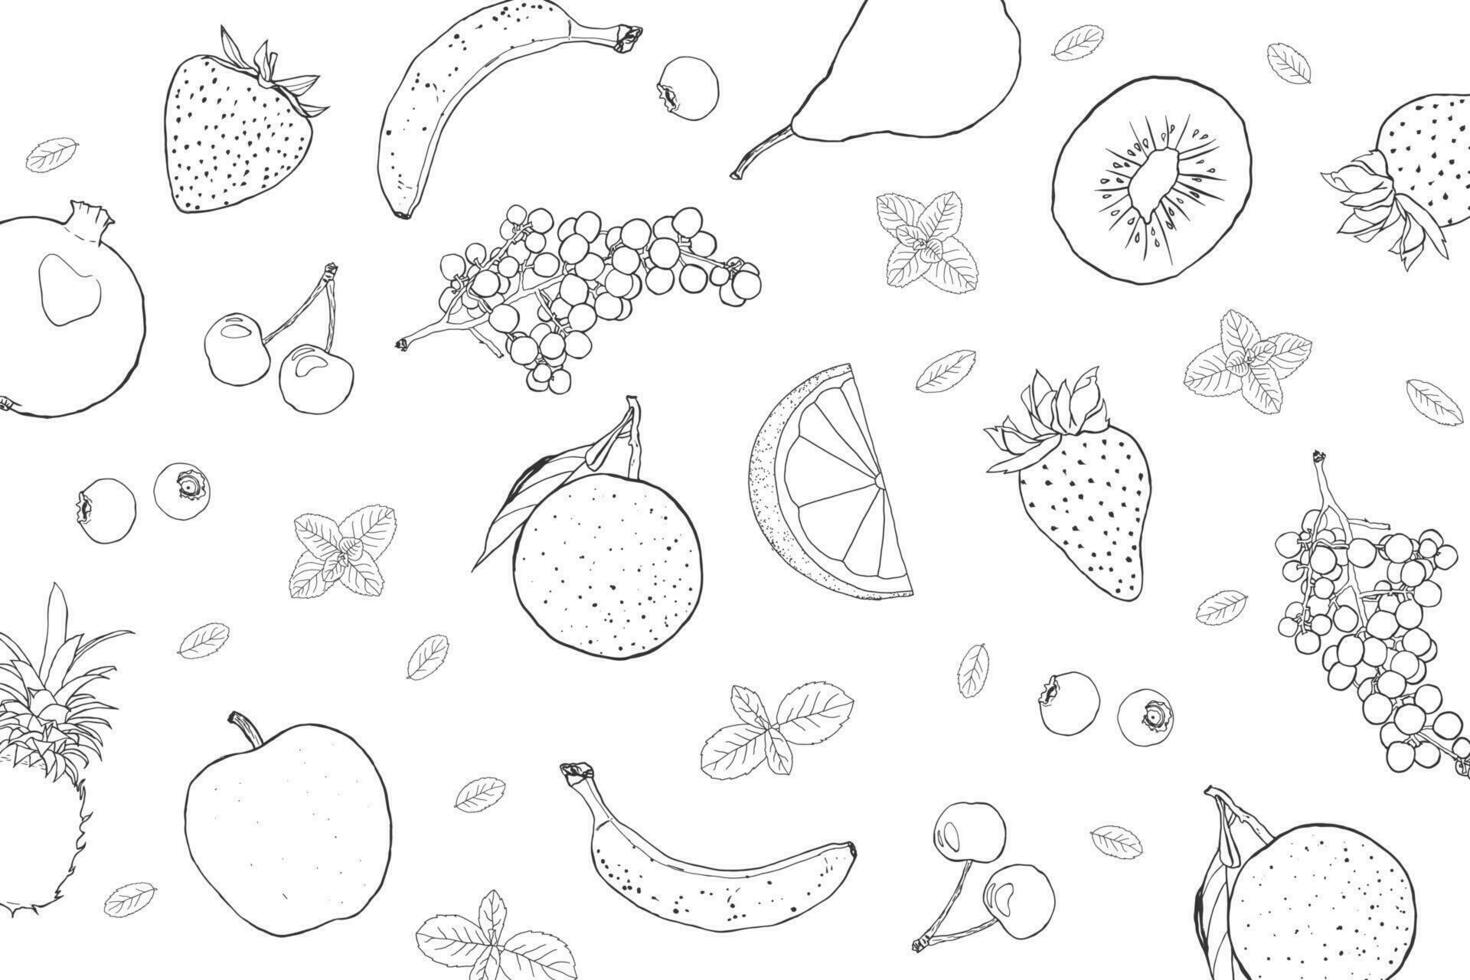 Fruit illustration sketch art black and white background vector